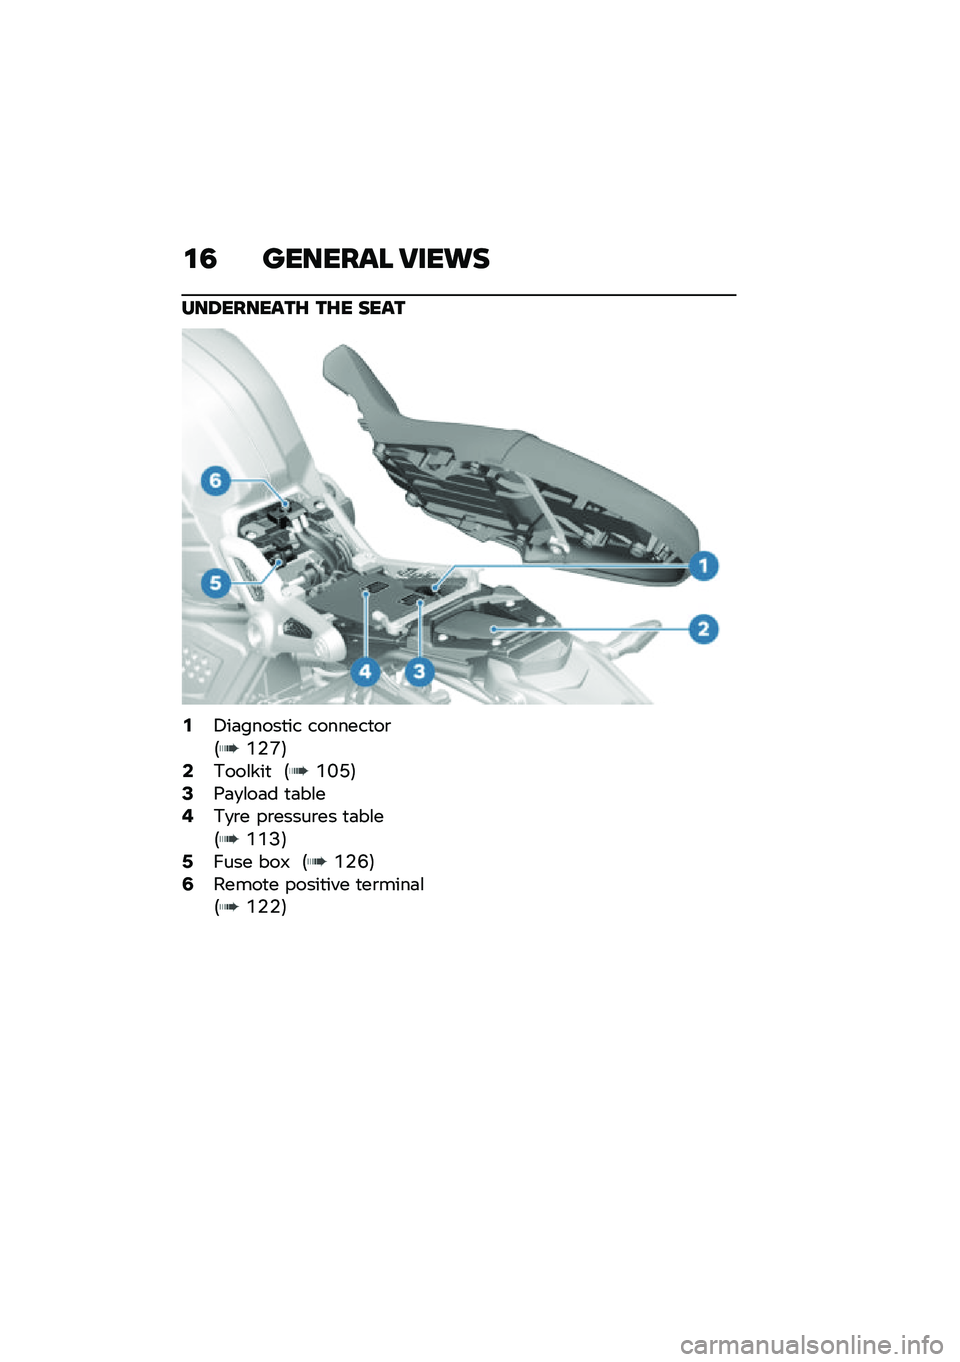 BMW MOTORRAD R NINE T URVAN G/S 2020  Riders Manual (in English) �\f�5 ������� �9���\b�
���8�������G ��G� ����
�,�4��	�����
�� �������
��\b�5�A�$�G�6�.�*���\f���
 �5�A�L�E�6�0�8�	�
�\f��	� �
�	��\f��2�*�
�\b� ��\b��